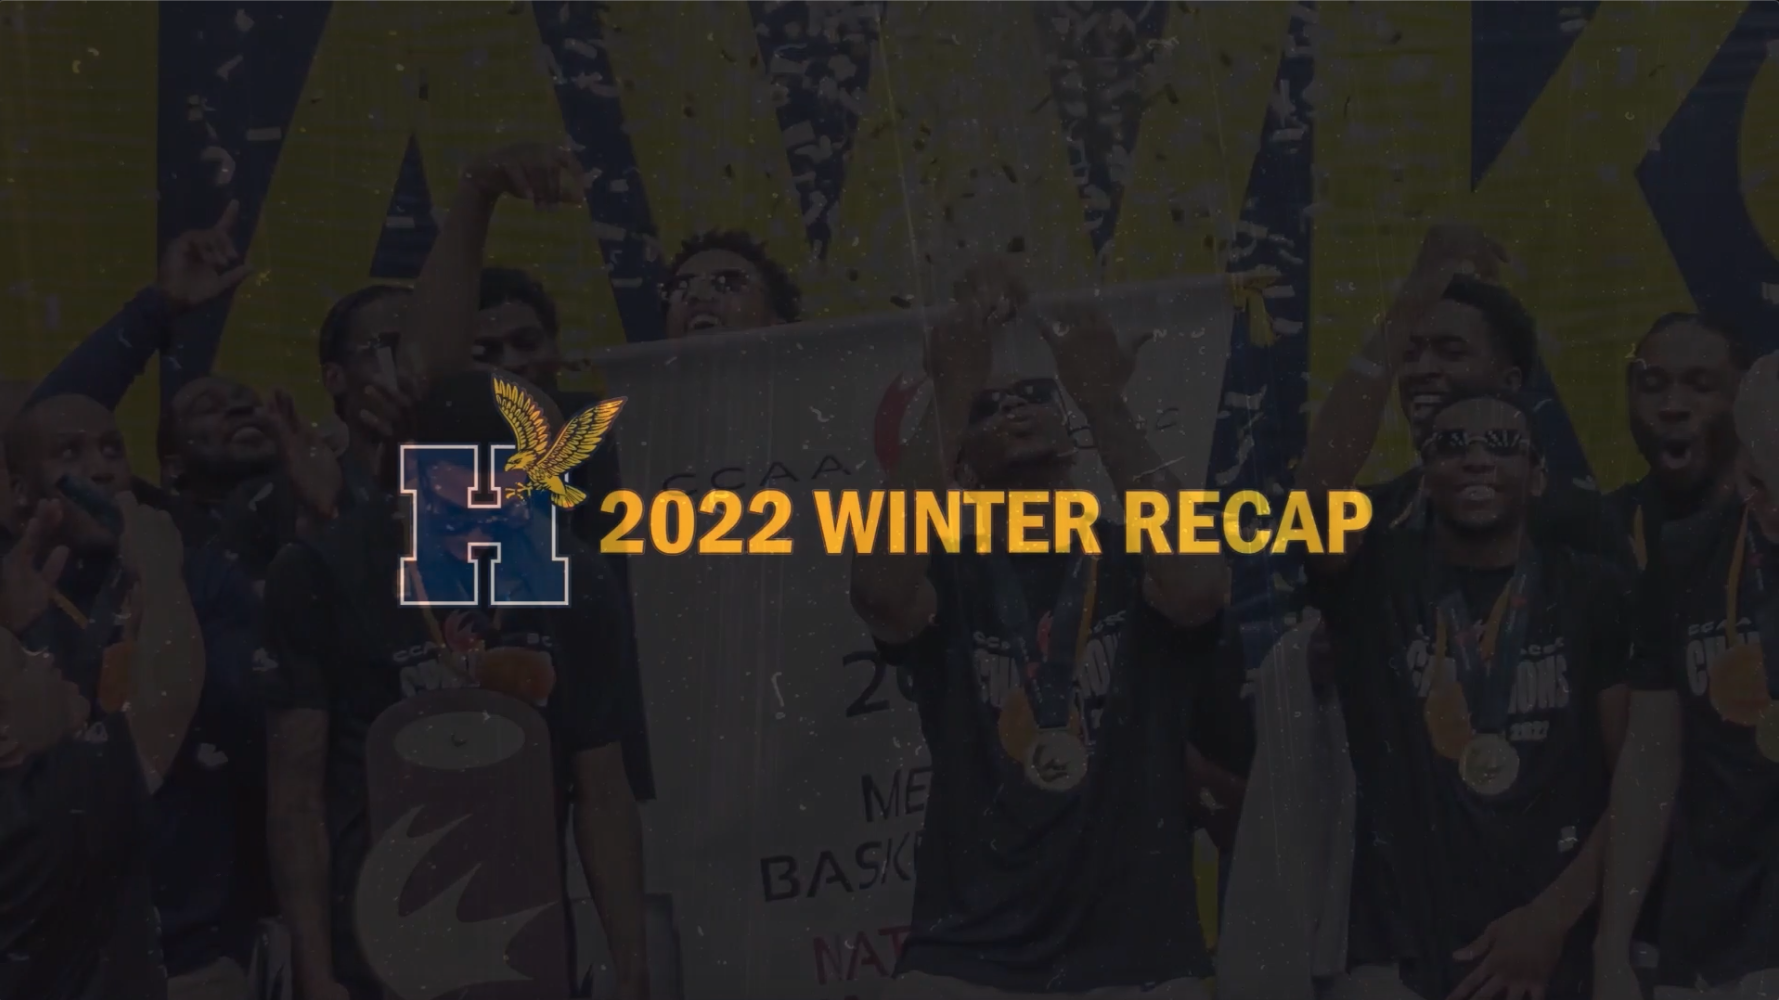 2022 Winter Recap with Humber logo